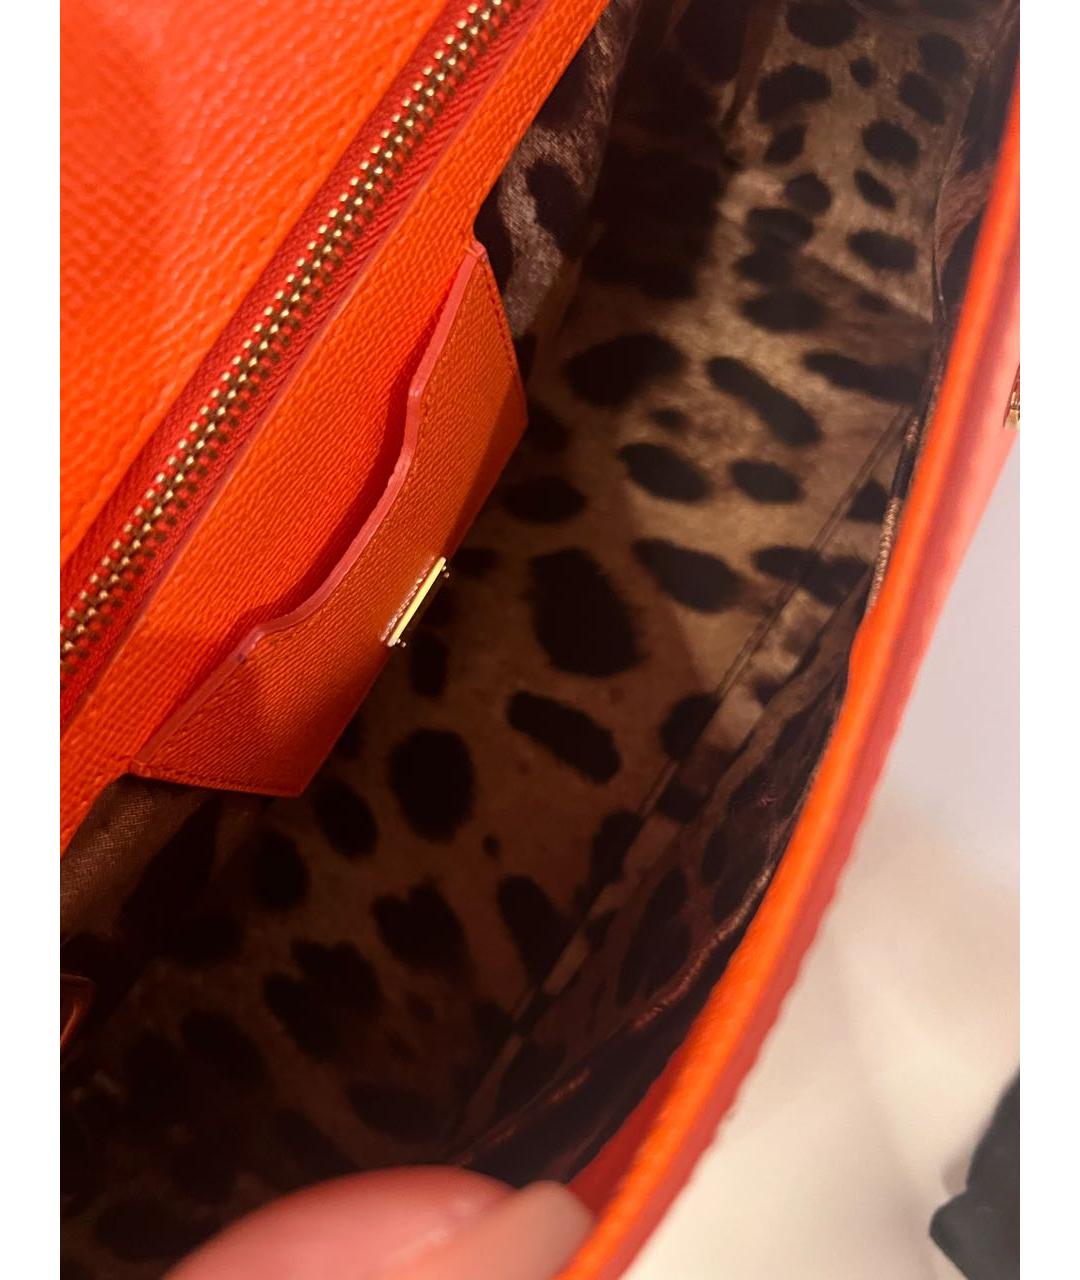 DOLCE&GABBANA Оранжевая кожаная сумка с короткими ручками, фото 3